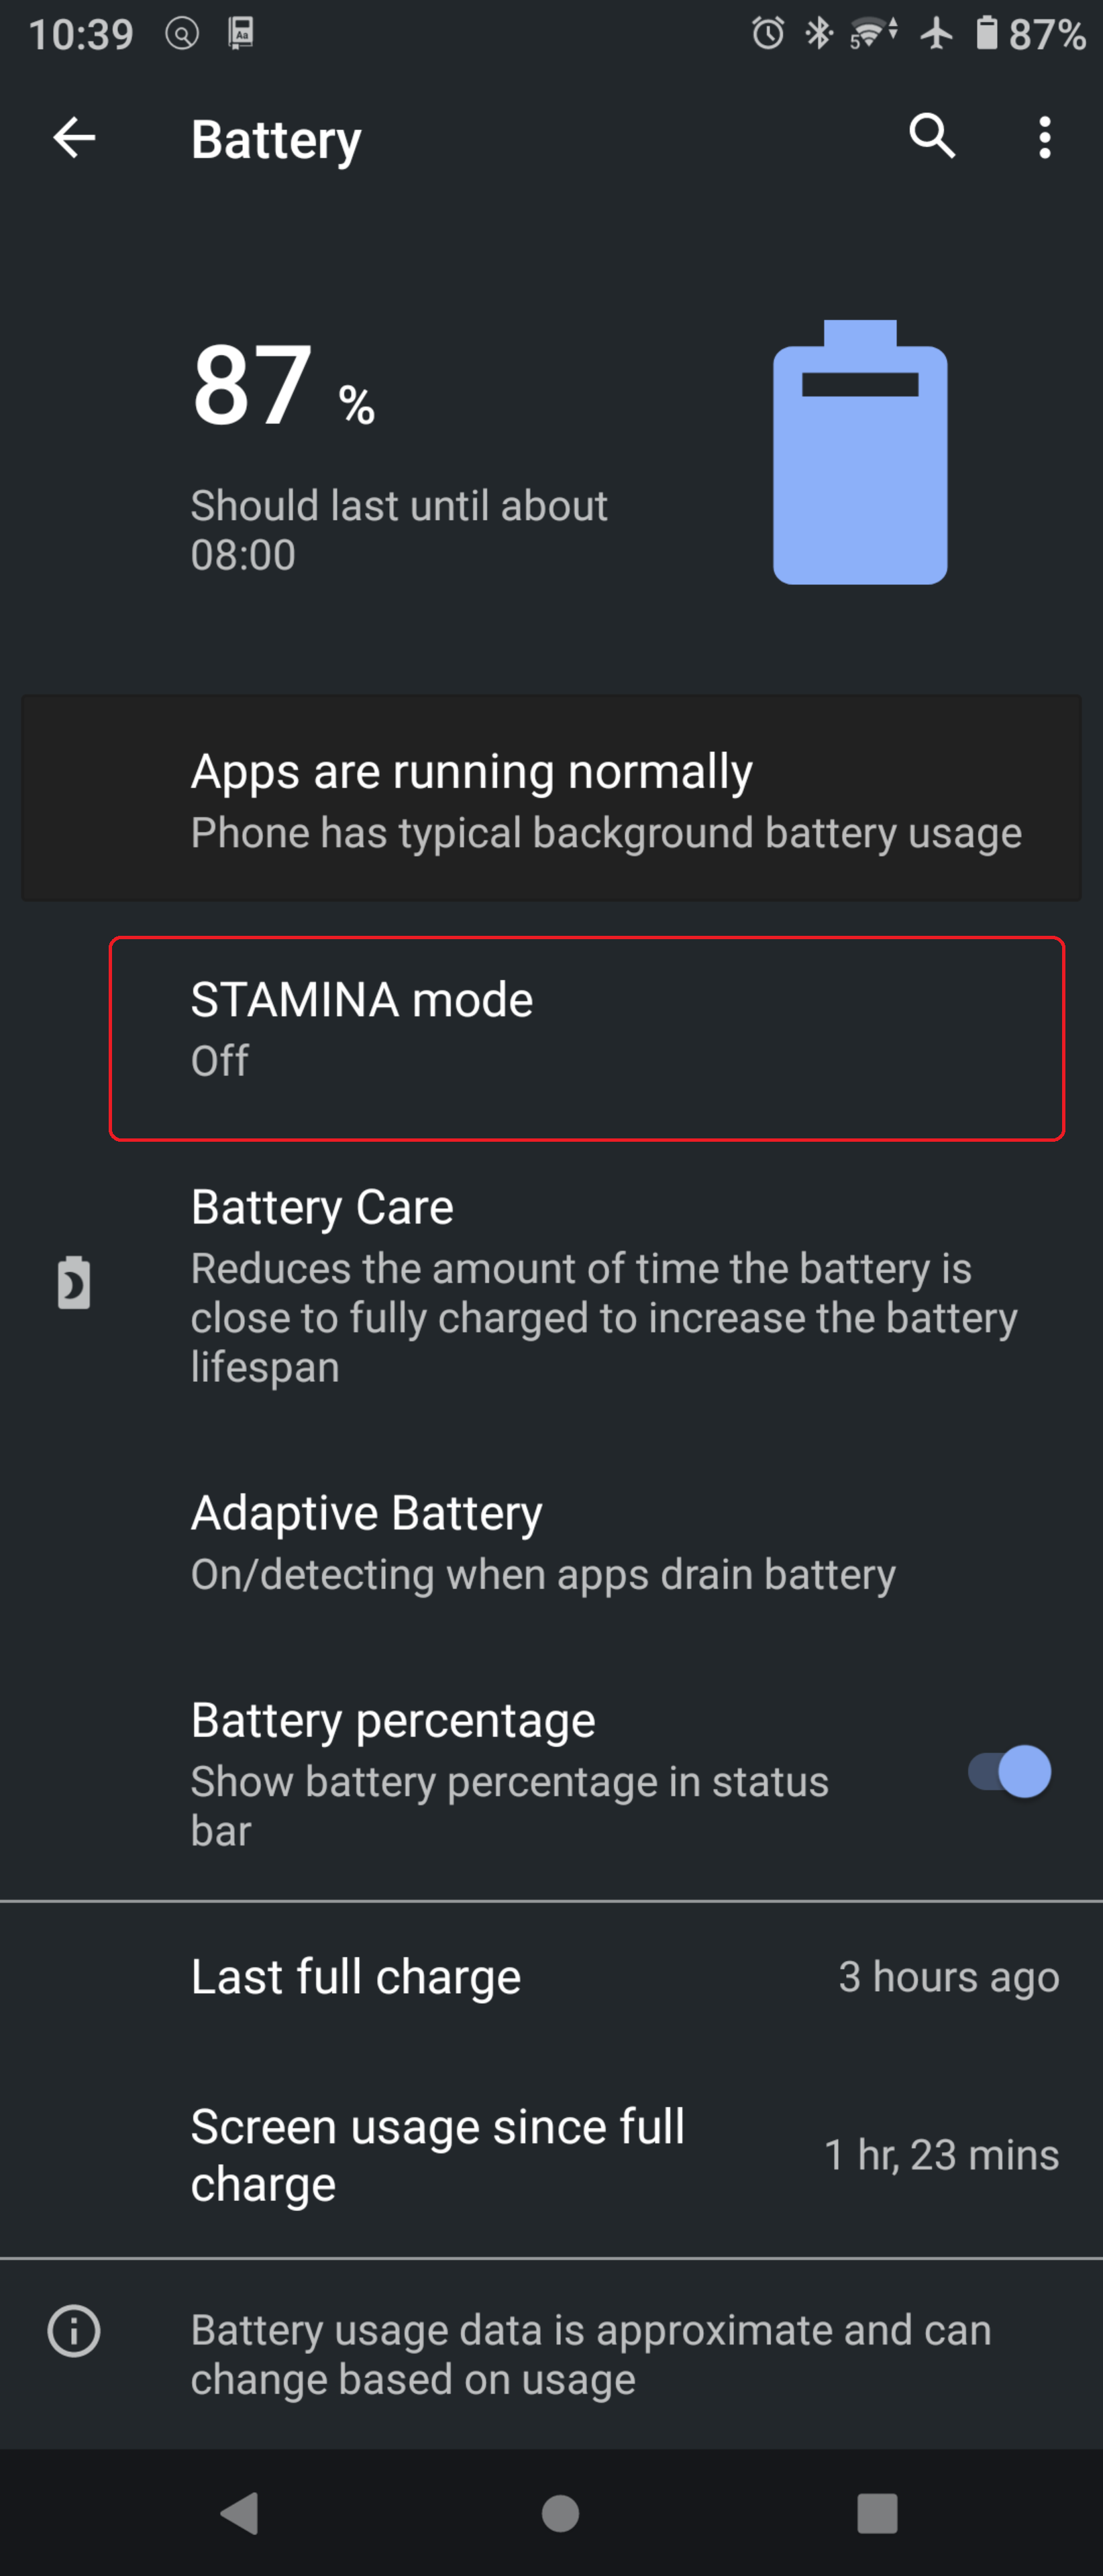 Sony Stamina mode *mobile